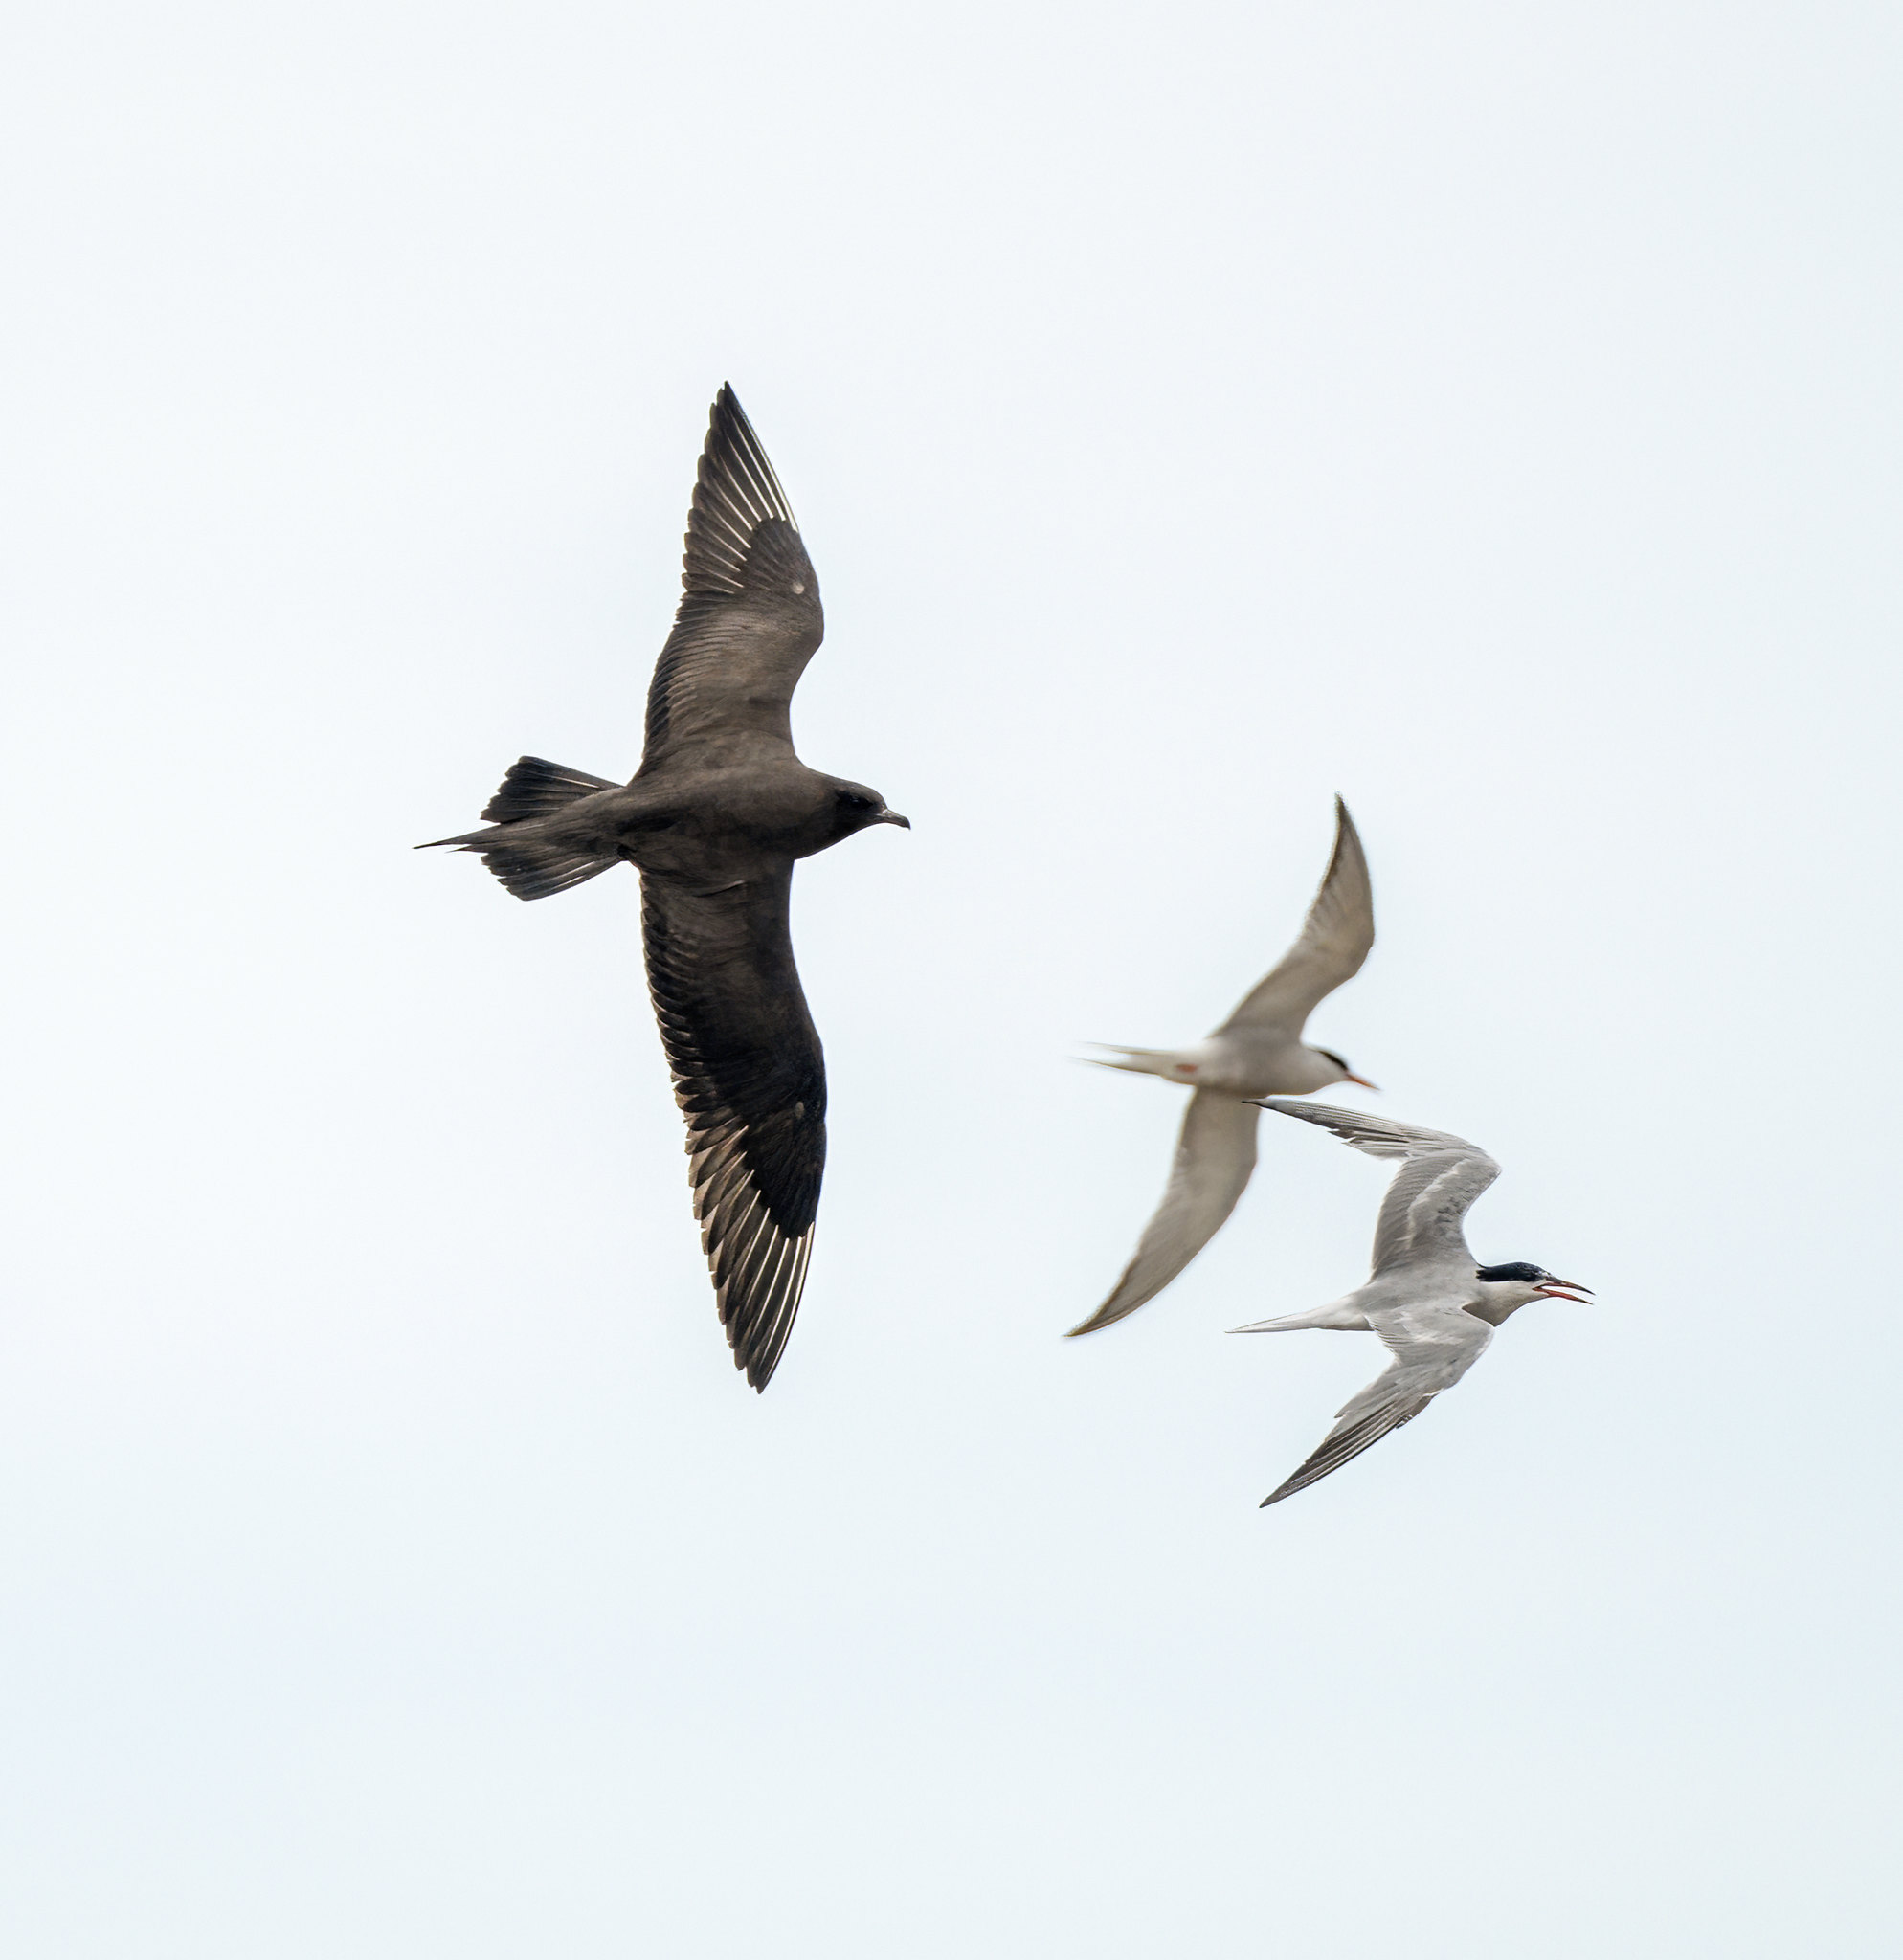 Arctic Skua chasing Terns - record shots